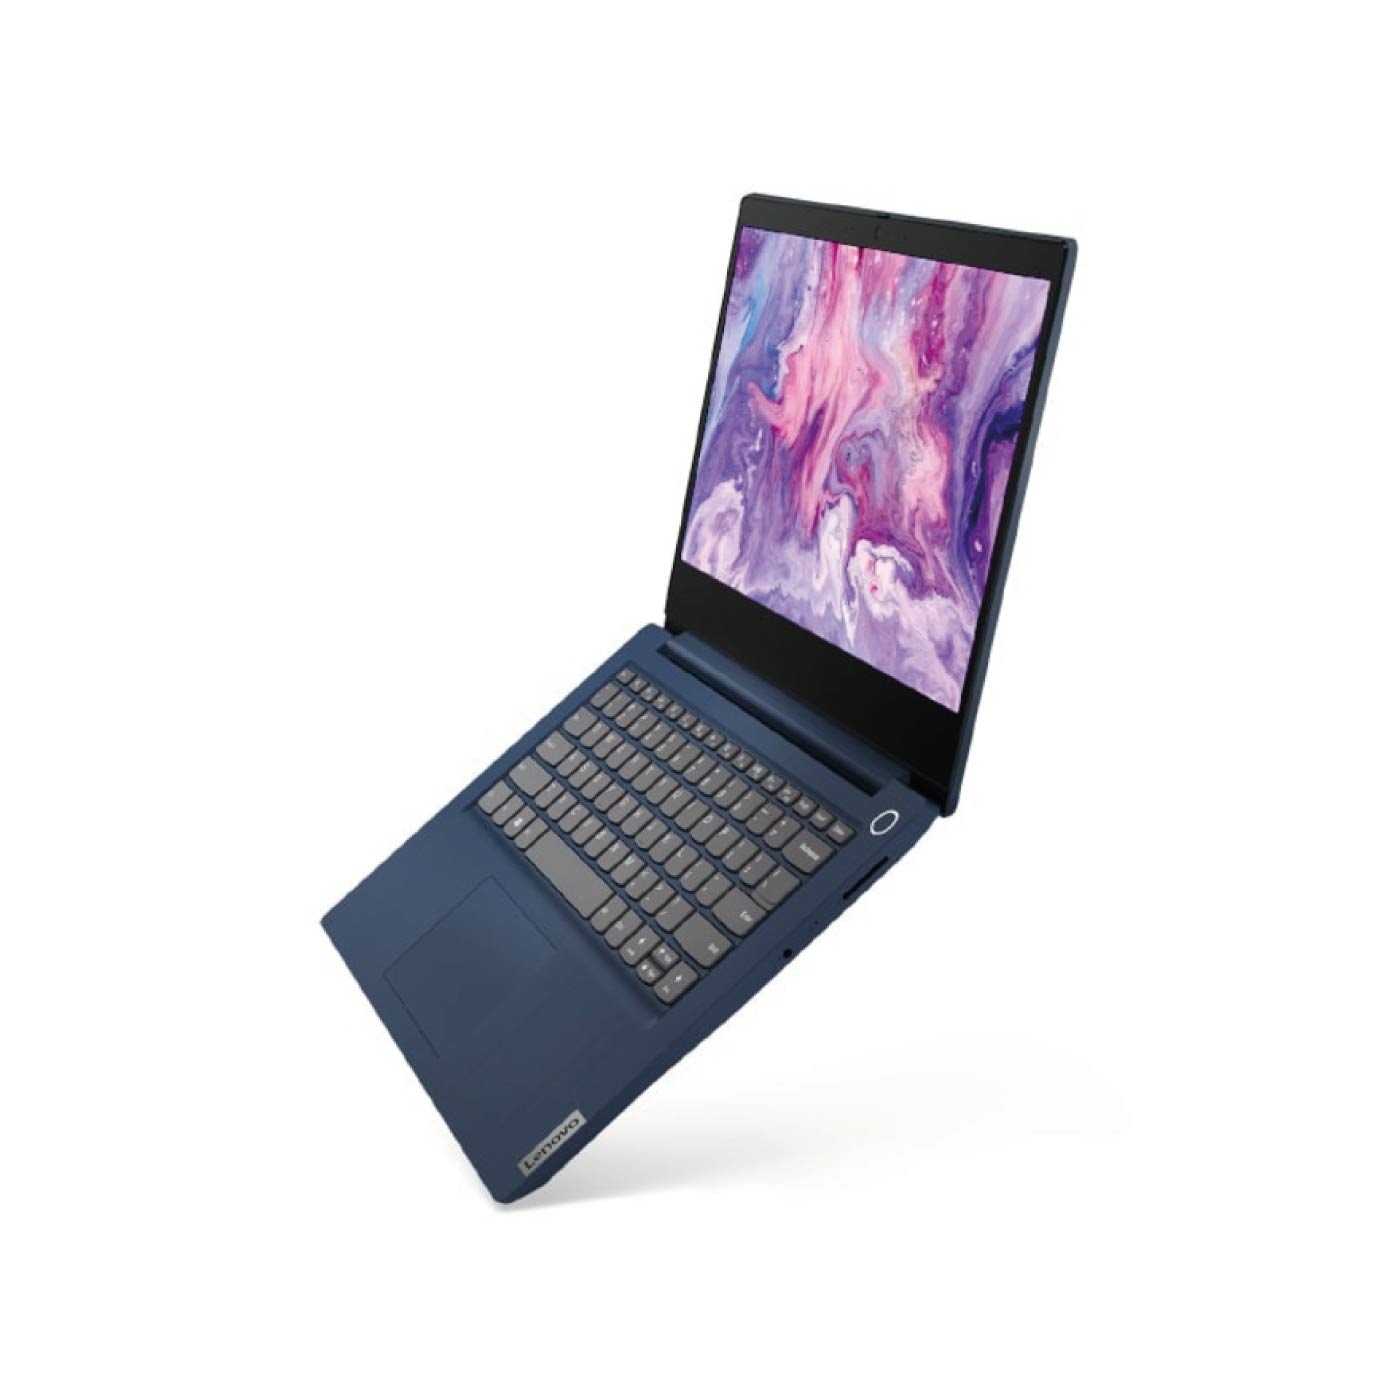 Computador Portátil LENOVO 14" Pulgadas IdeaPad 3 - Intel Pentium Gold - RAM 8GB - Disco SSD 256GB - Azul